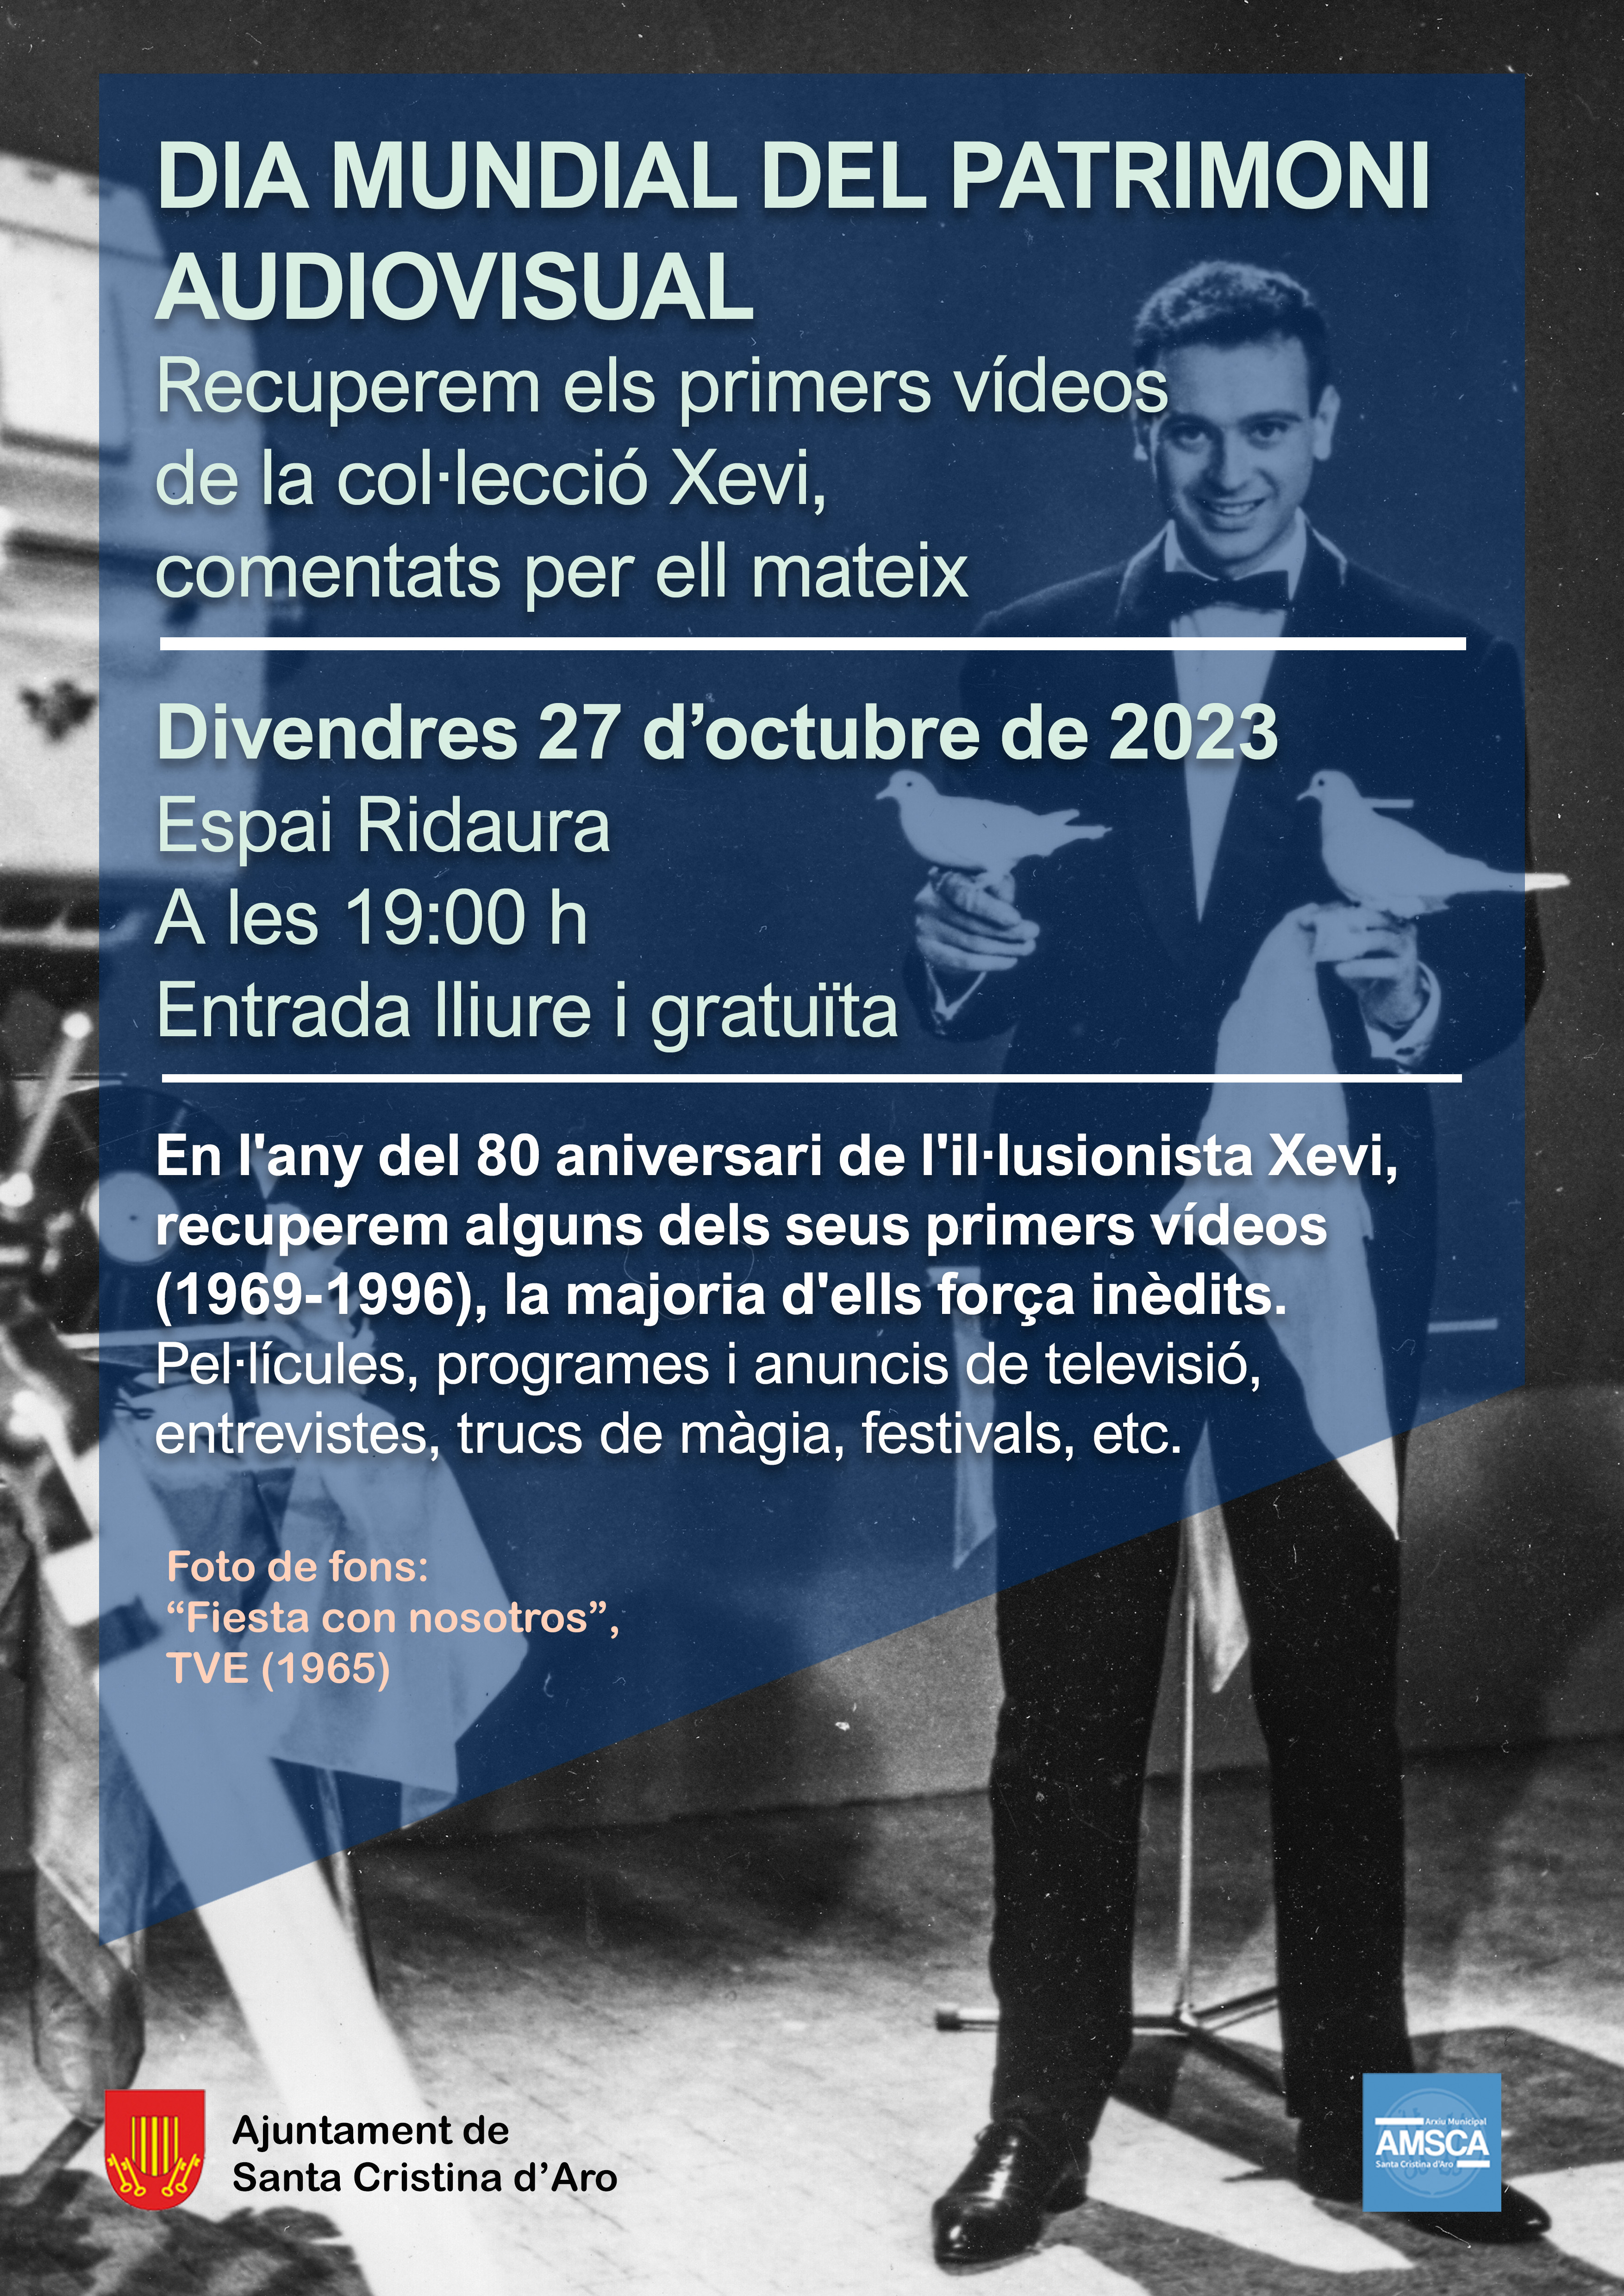 Dia Mundial del Patrimoni Audiovisual A3 1